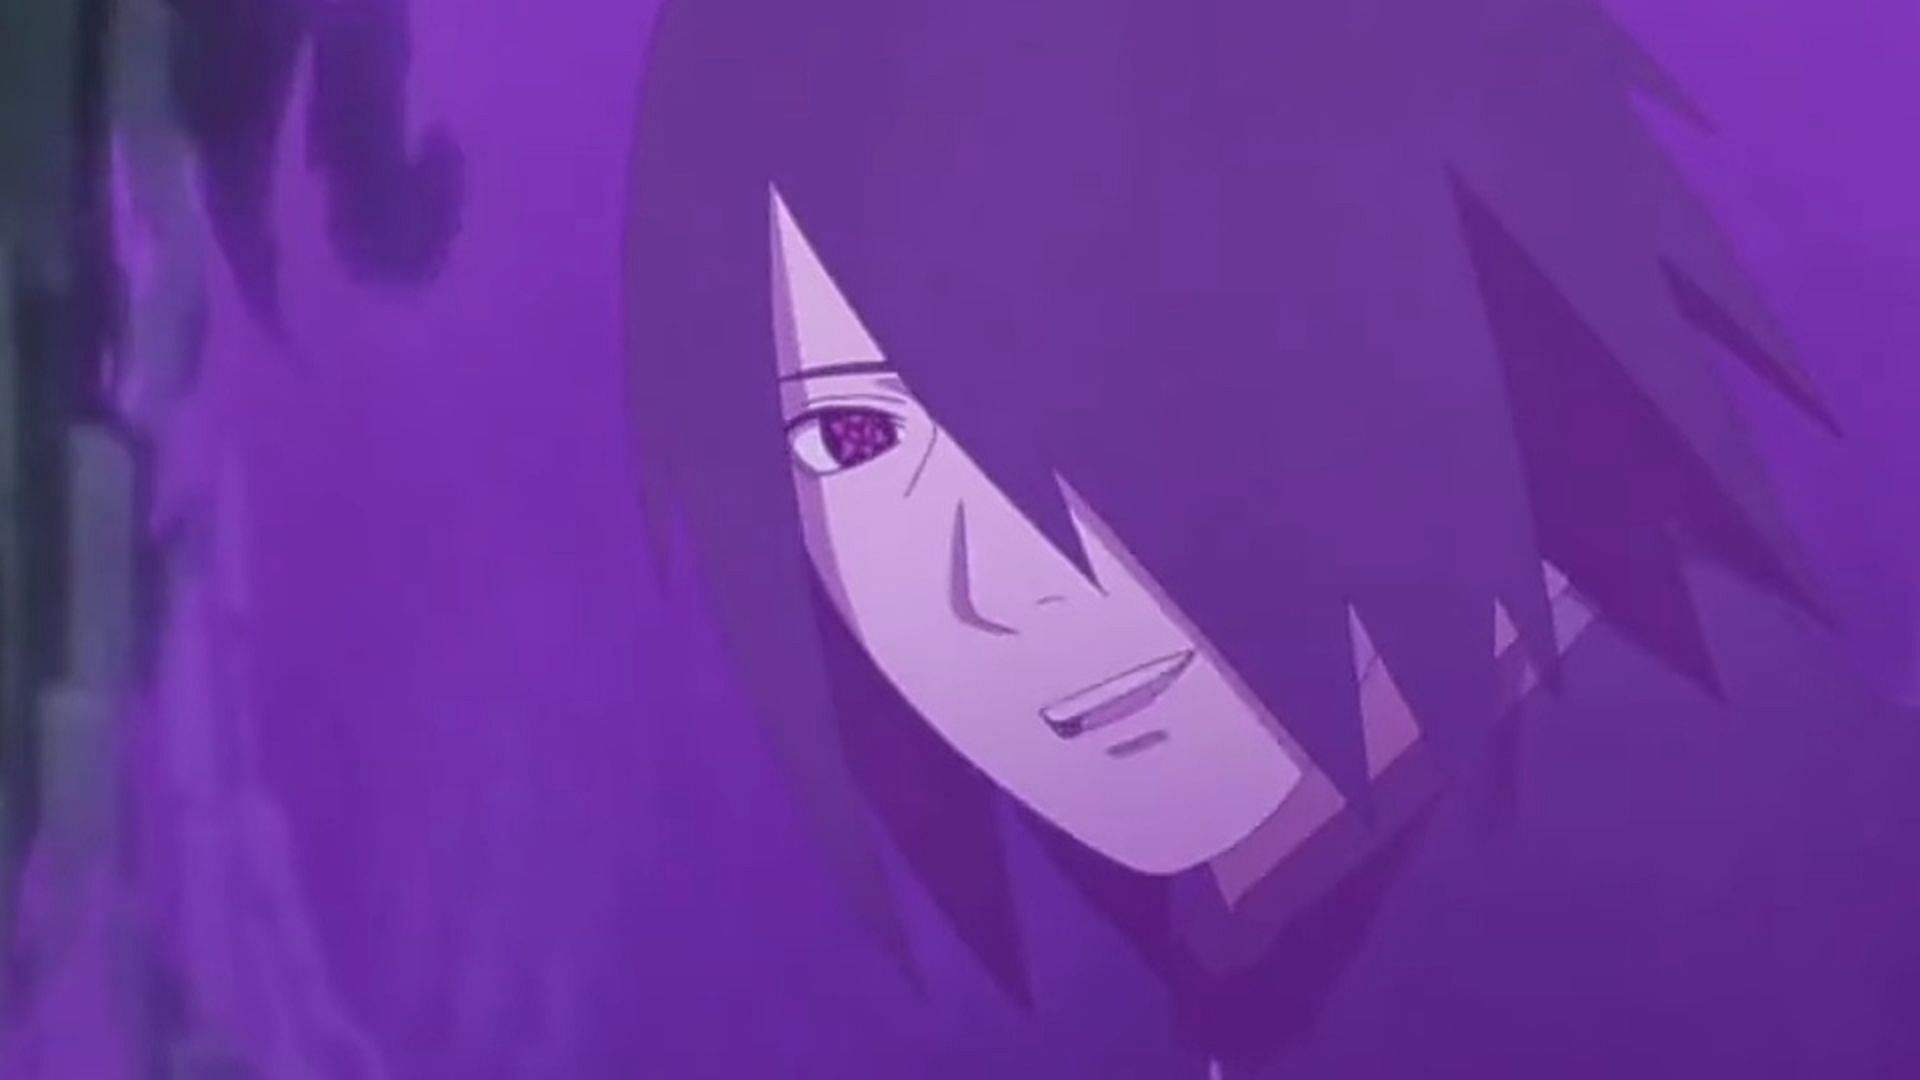 Sasuke as seen in the Boruto anime (Image via Studio Pierrot)